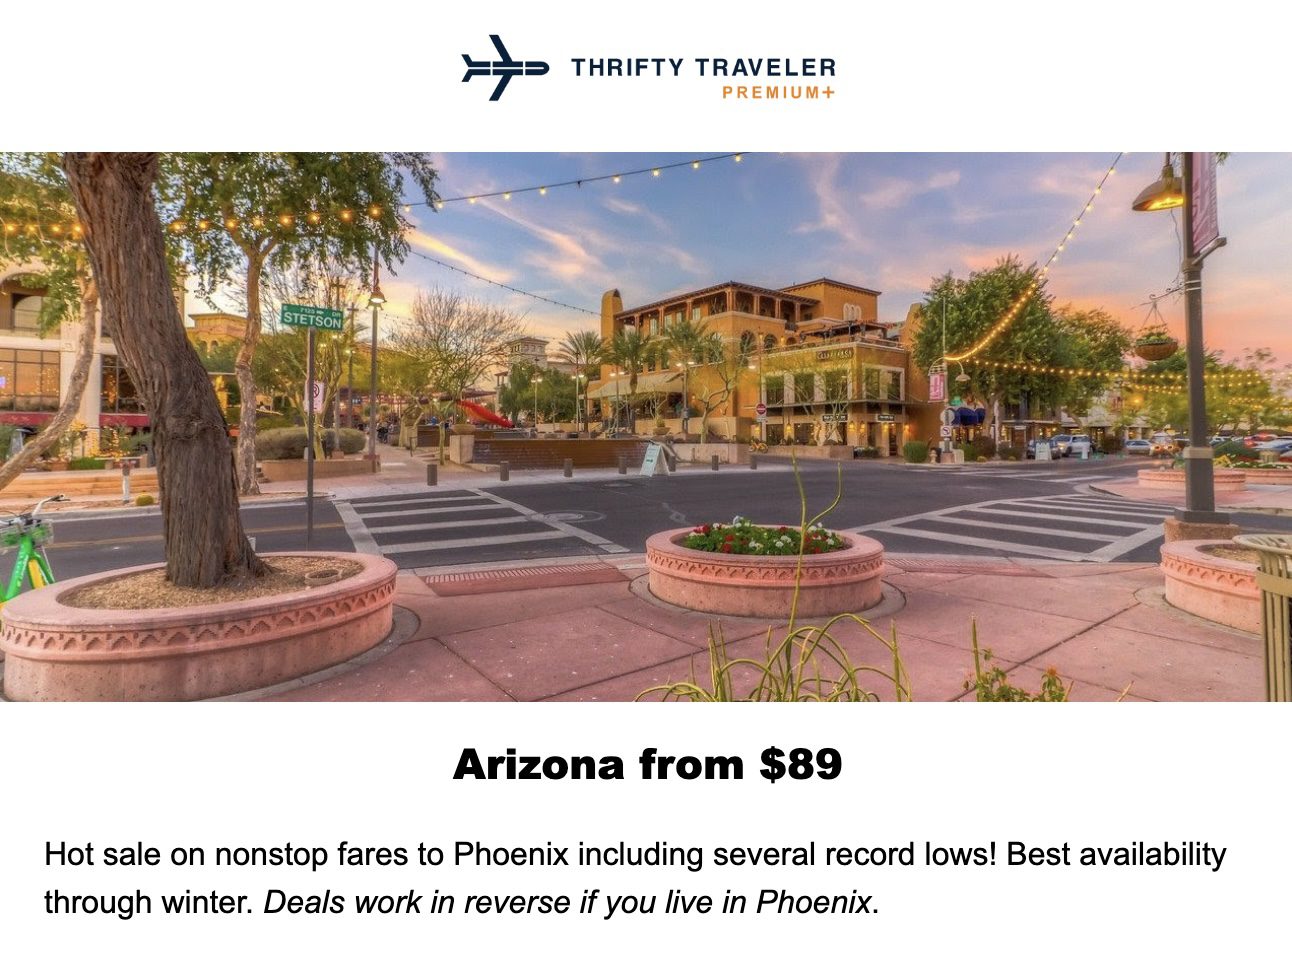 Cheap flights to Phoenix